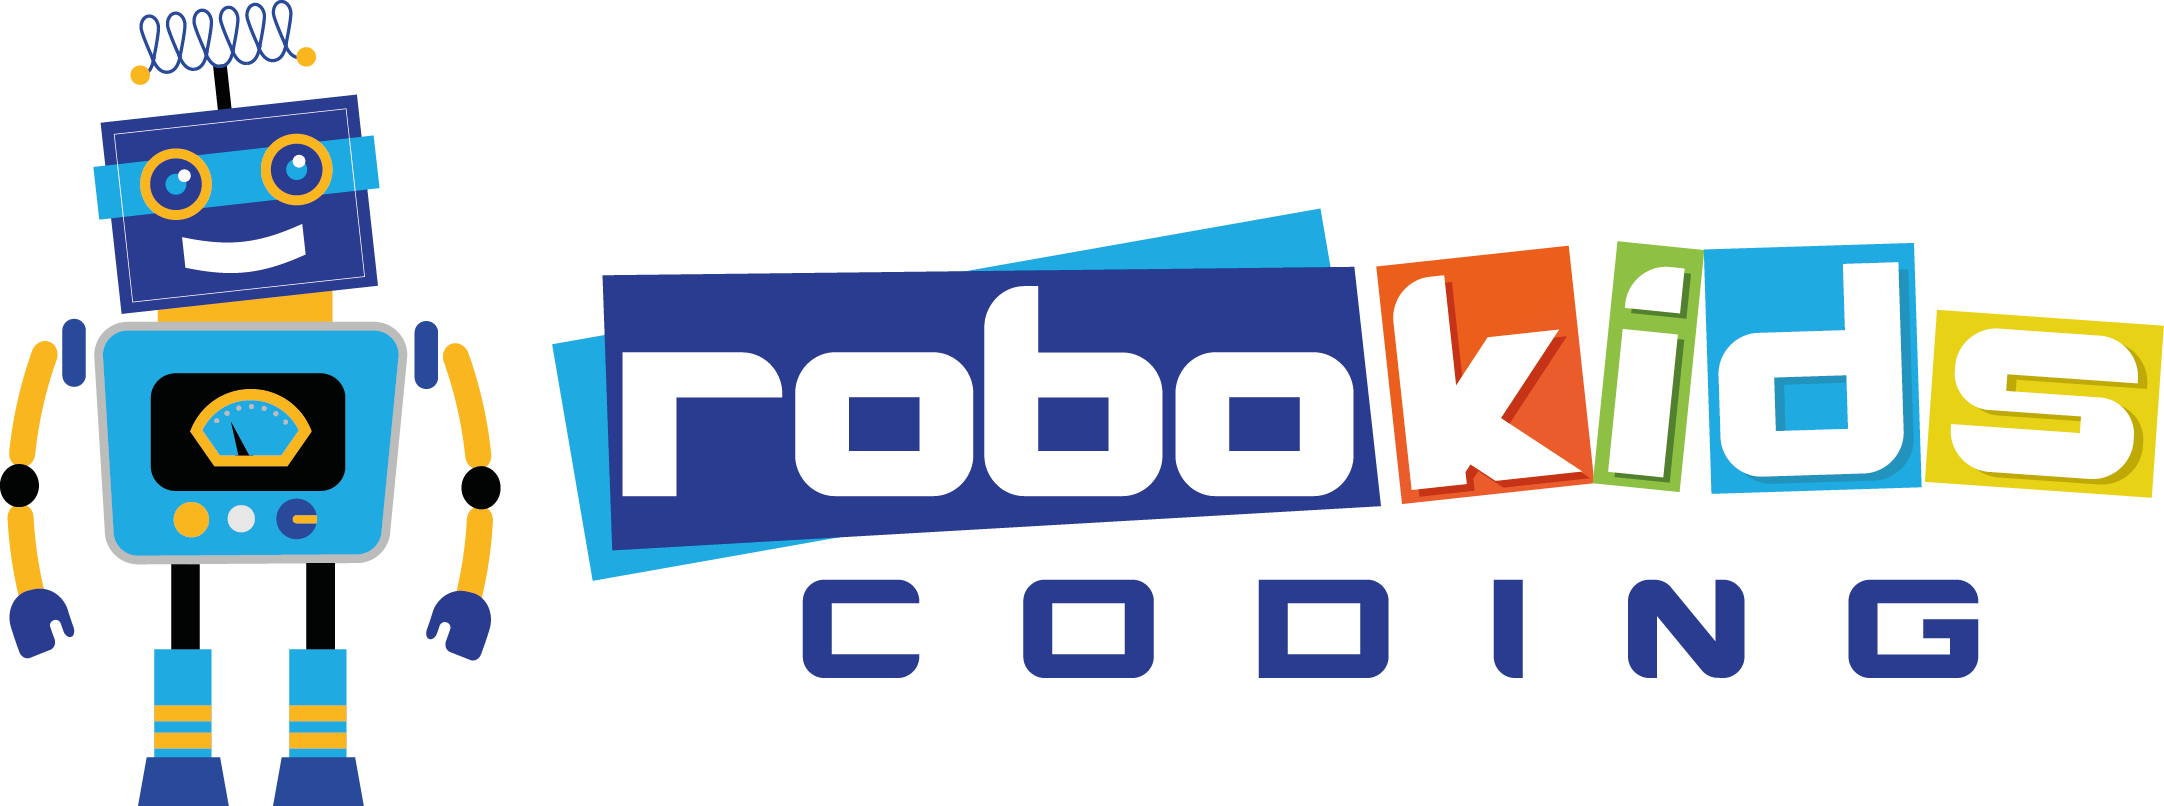 Robokids Coding